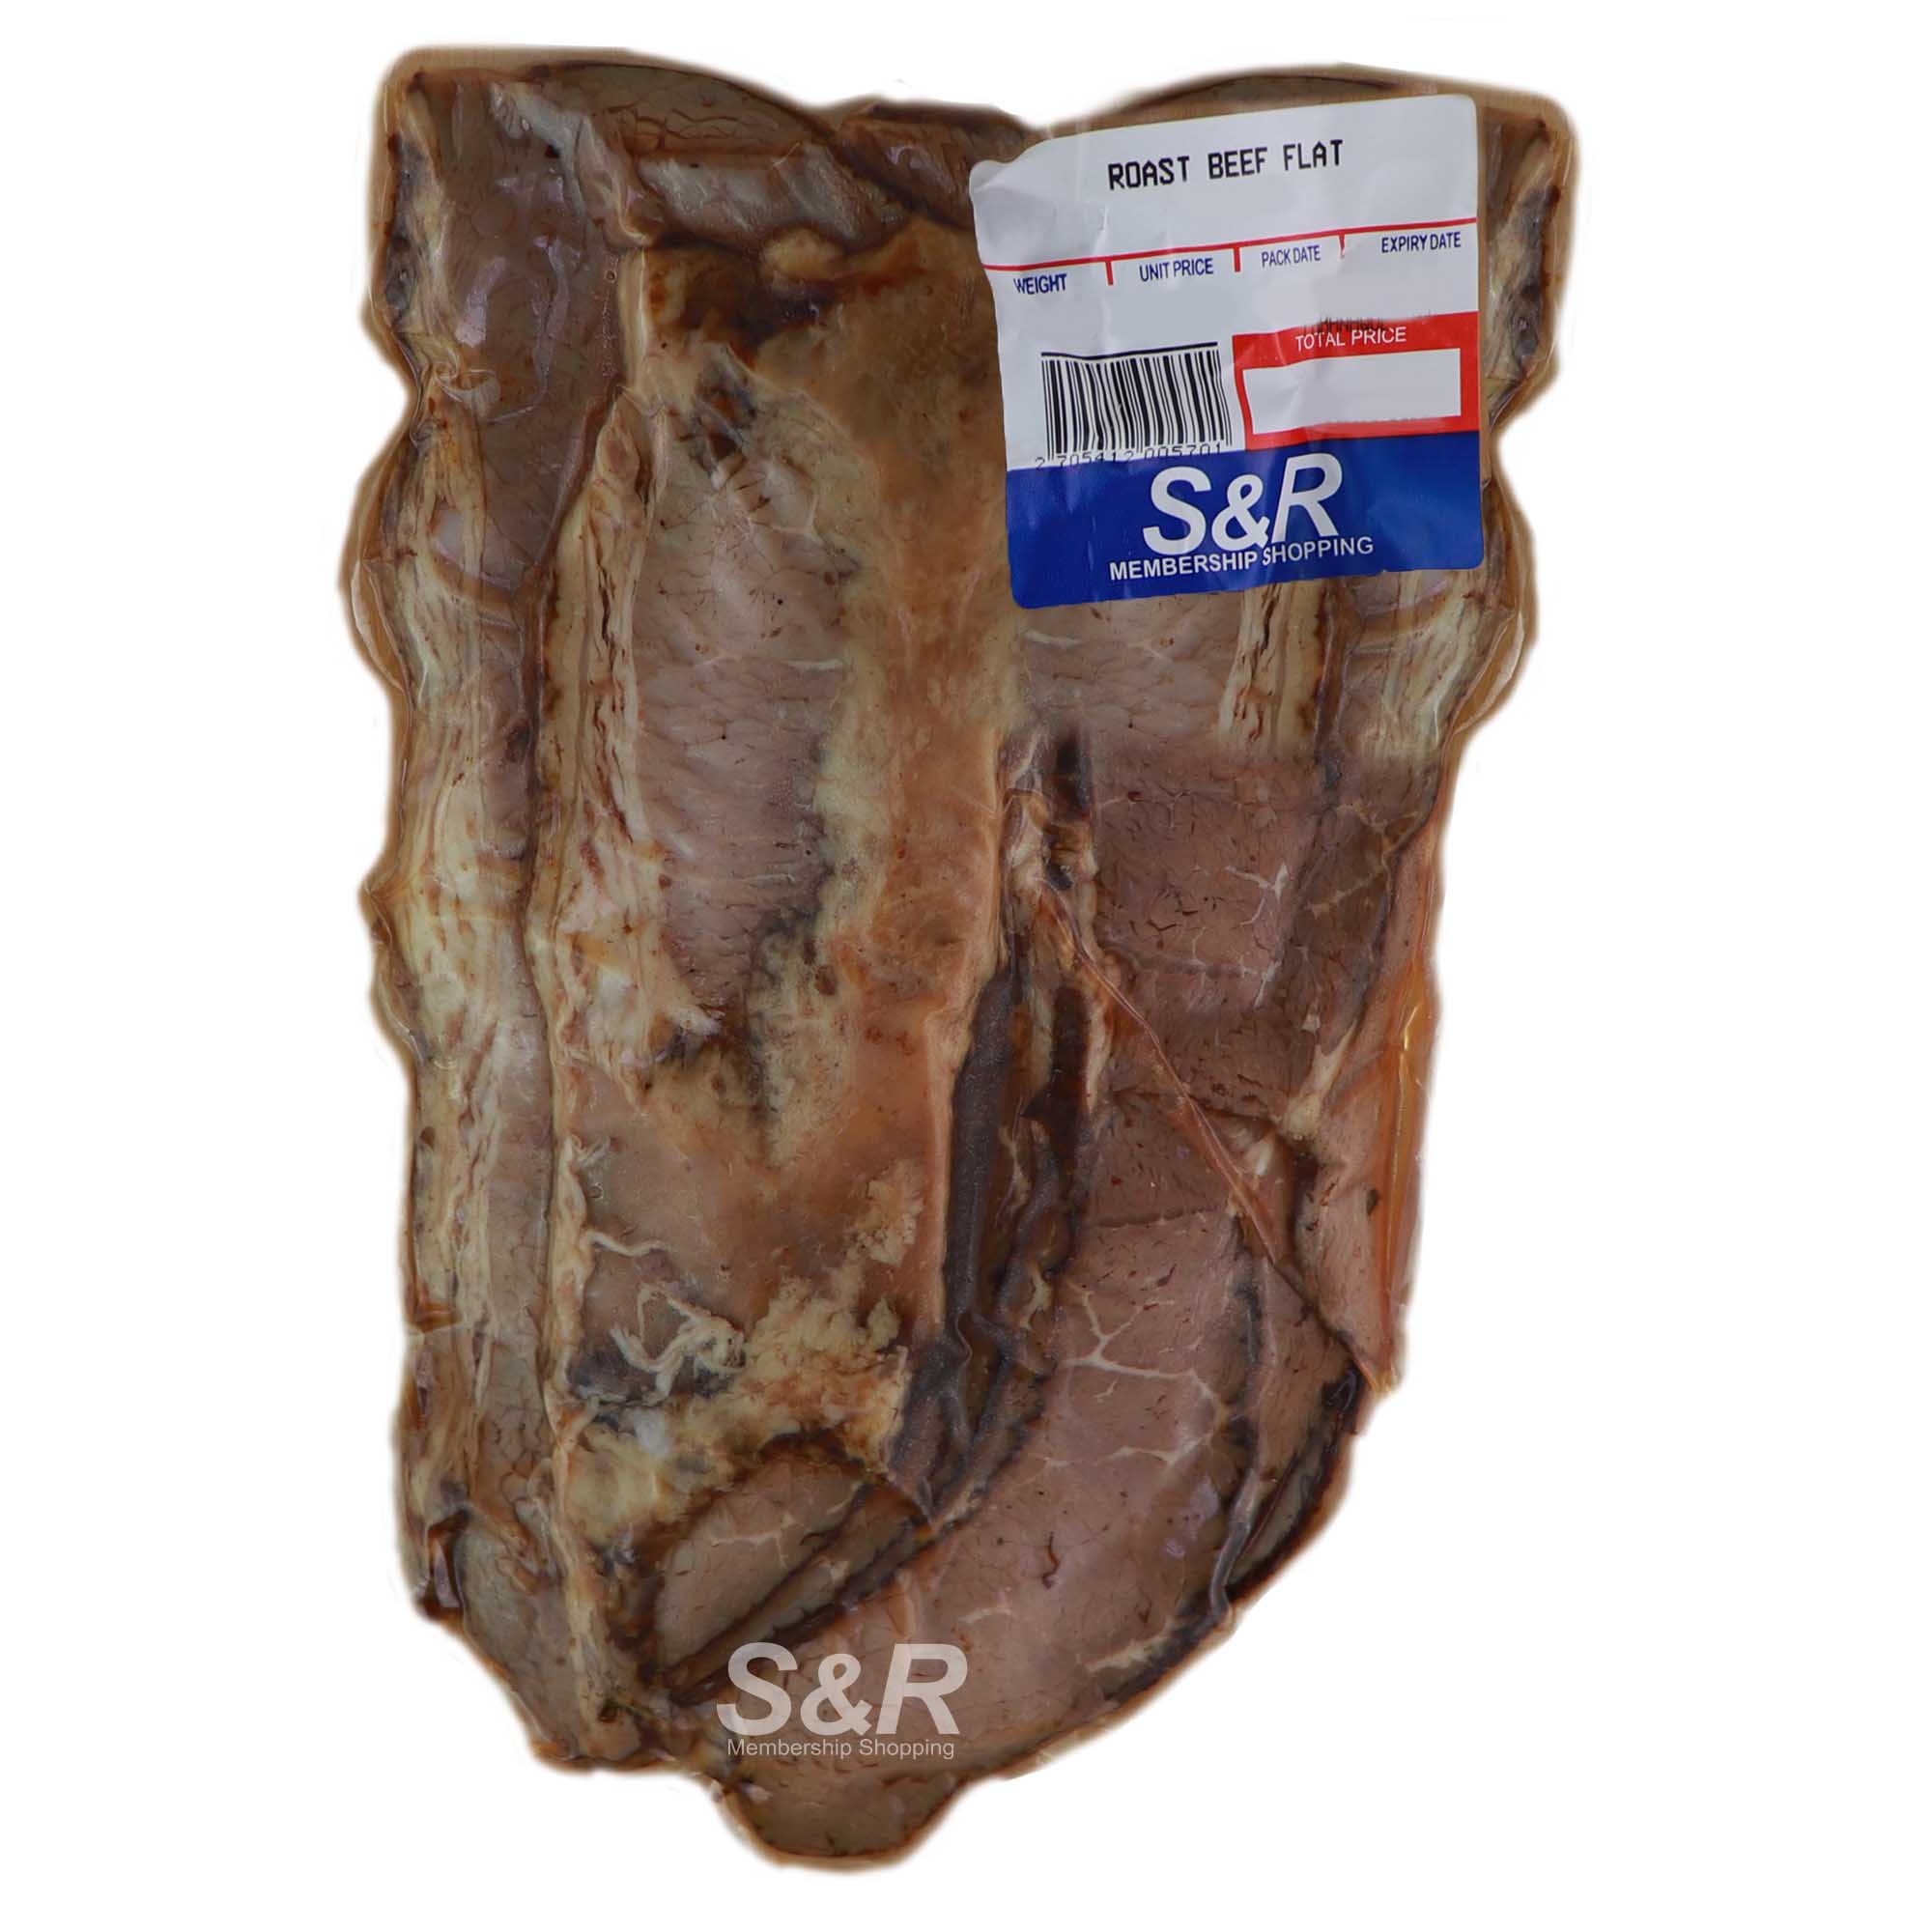 S&R Roast Beef Flat approx. 600g